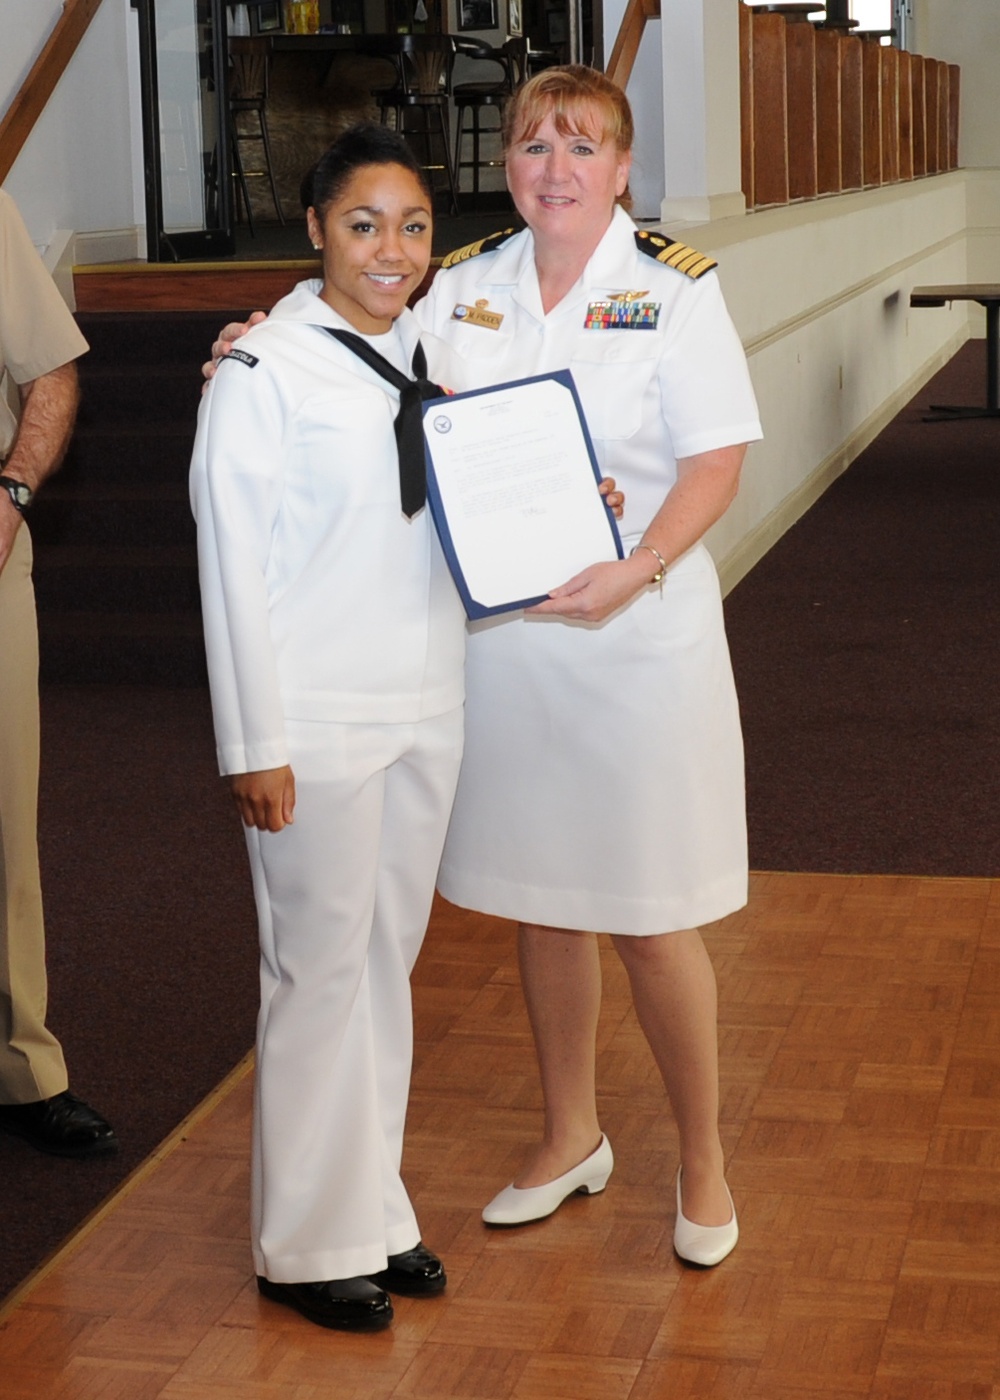 Newport native selected Best Sailor